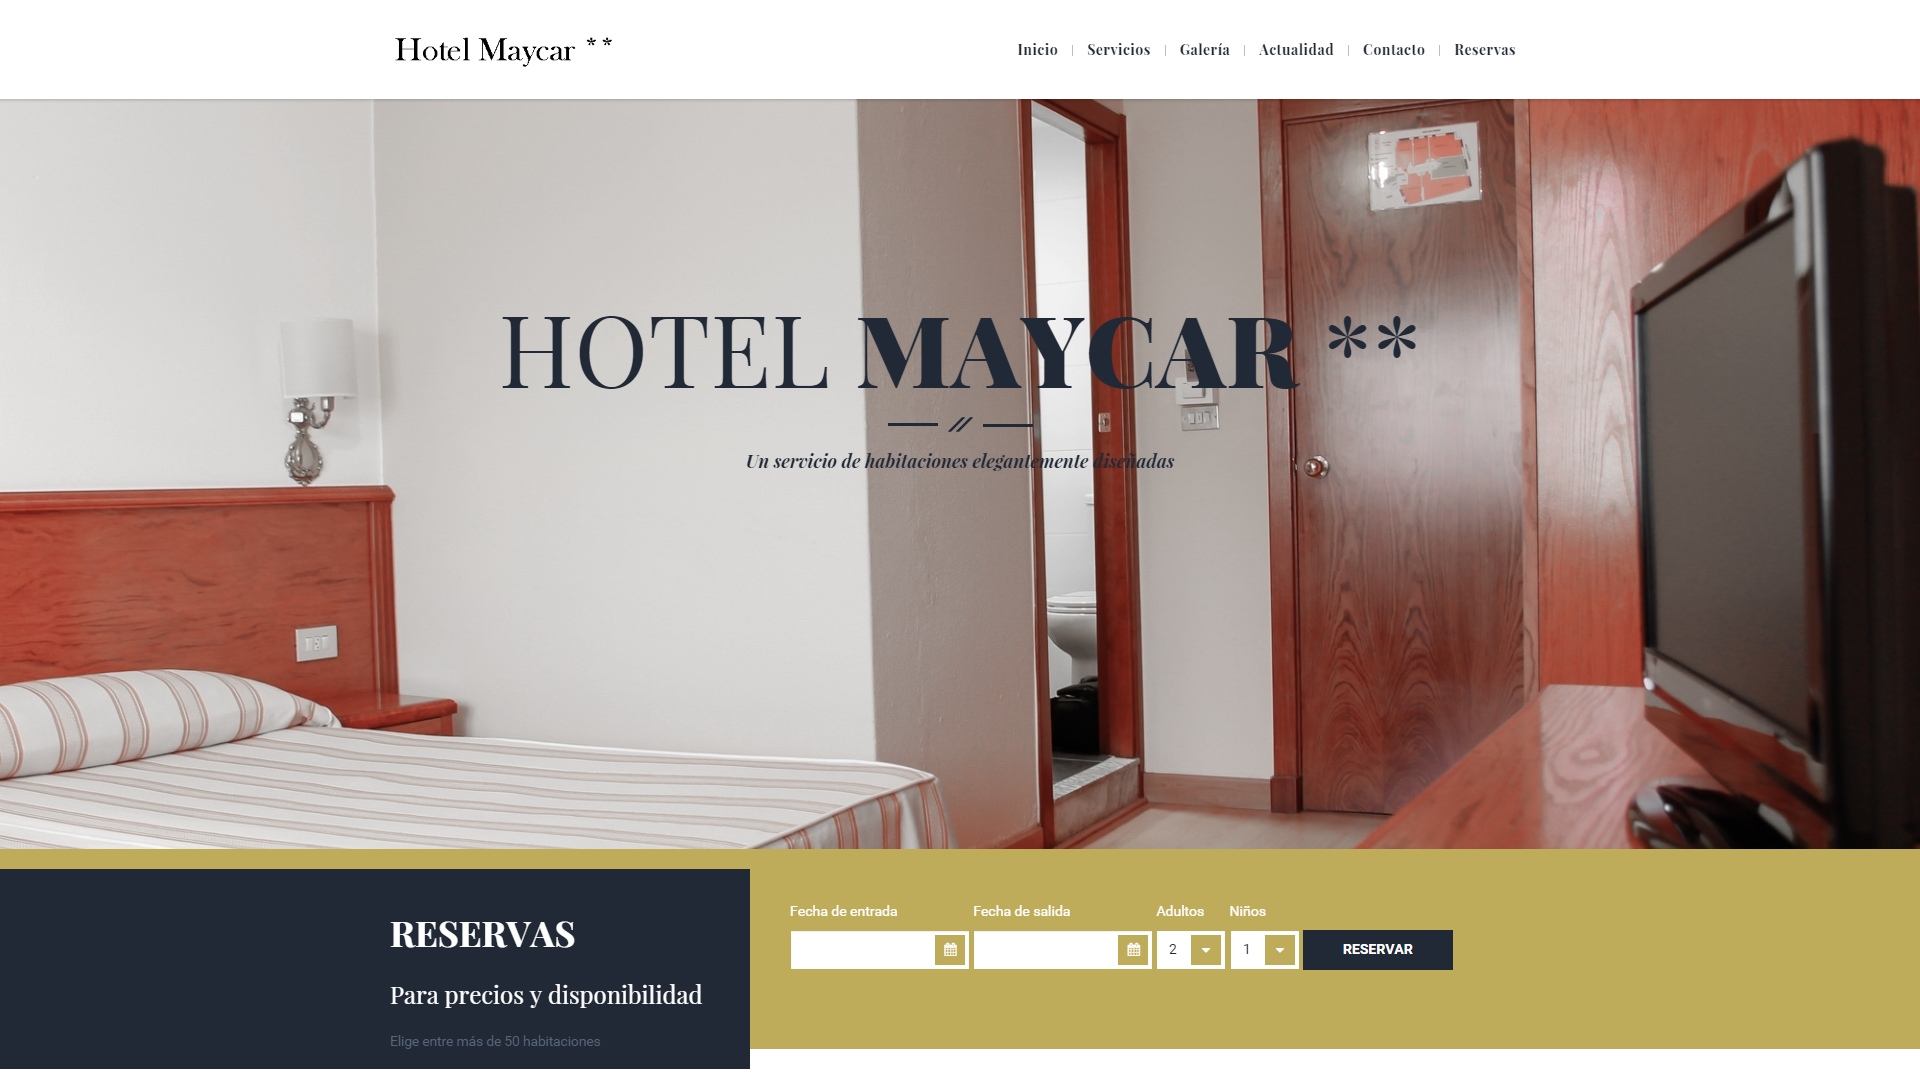 (c) Hotelmaycar.com